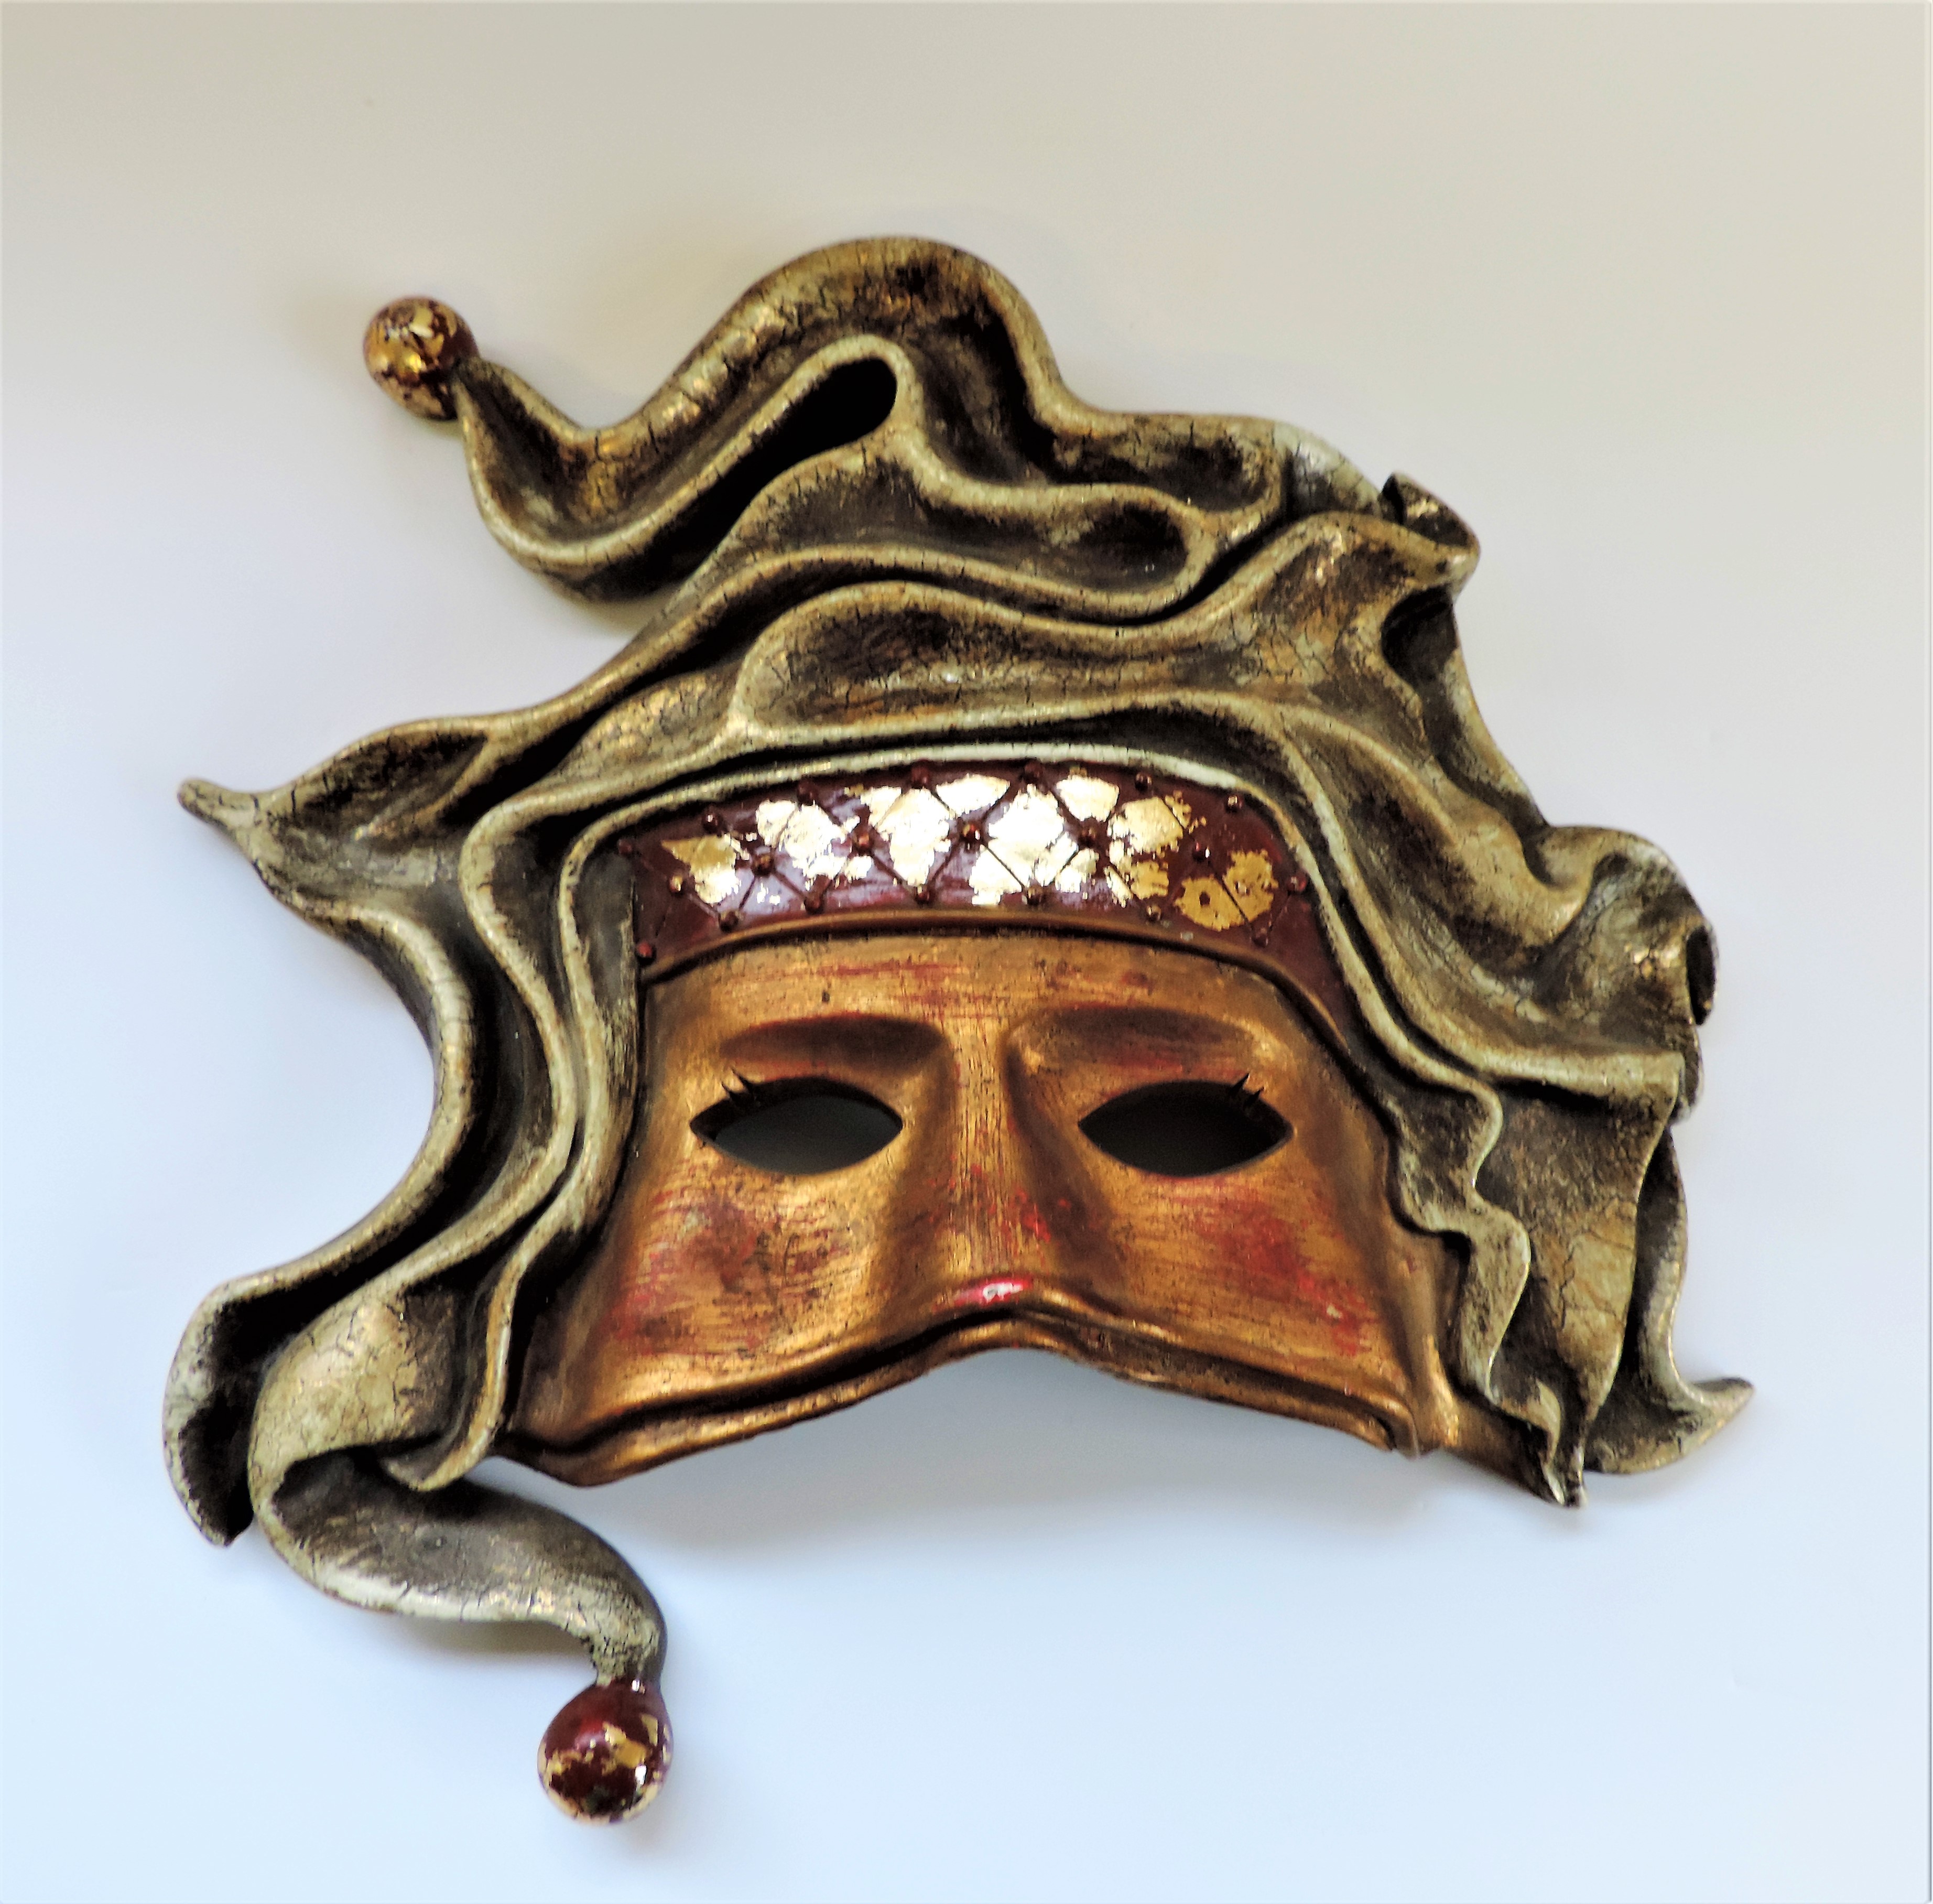 Artisan Harlequin Decorative Wall Mask